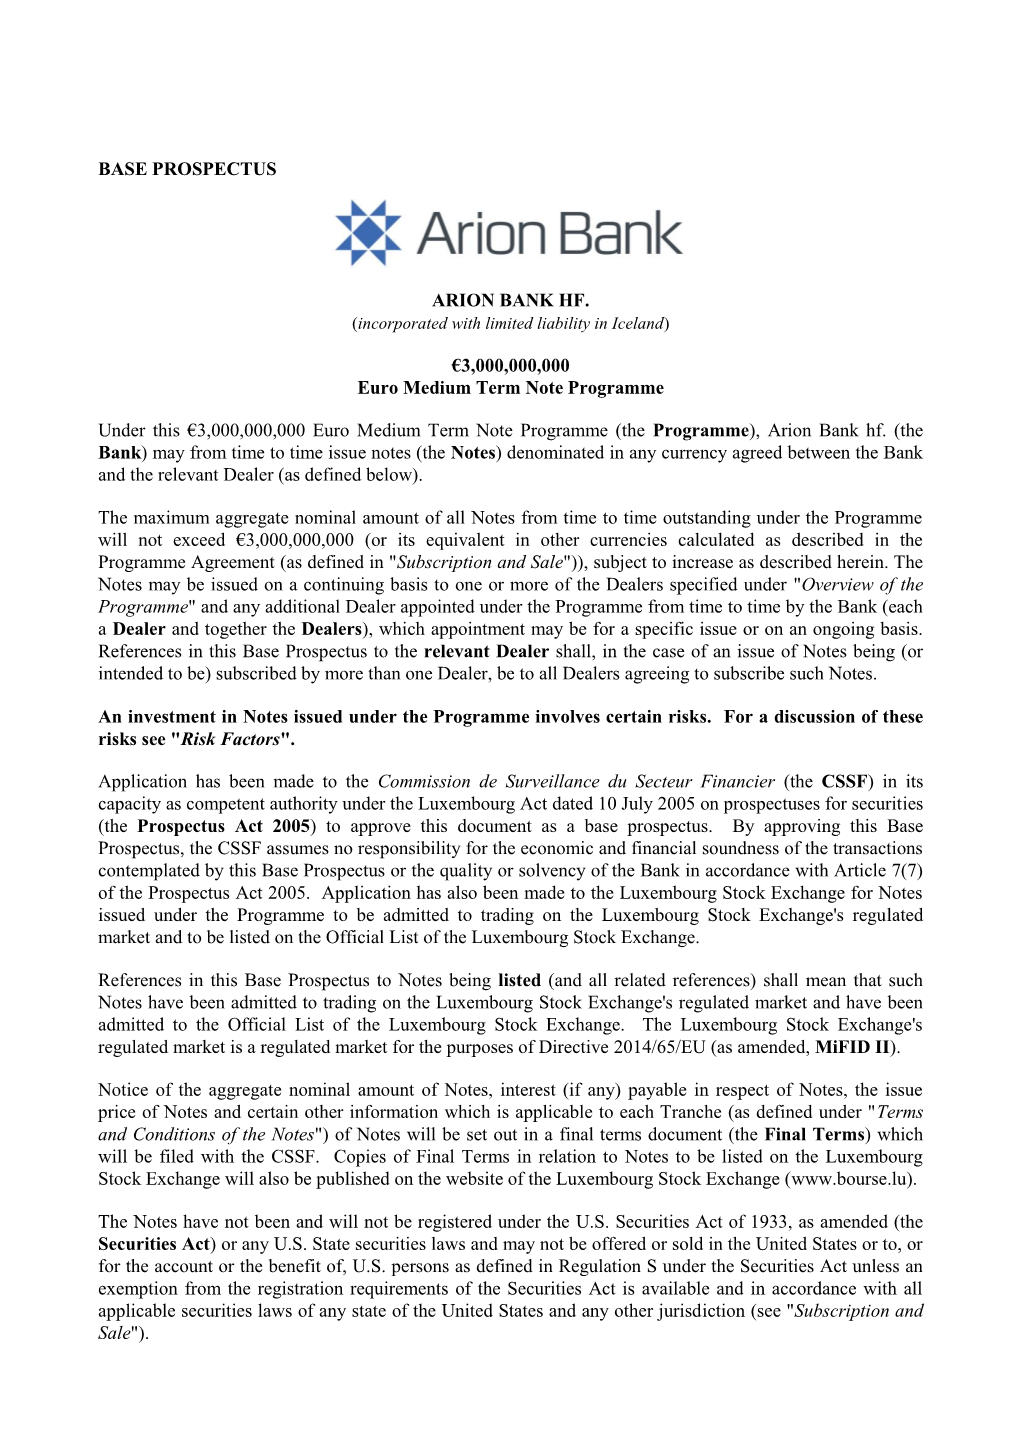 BASE PROSPECTUS ARION BANK HF. €3,000,000,000 Euro Medium